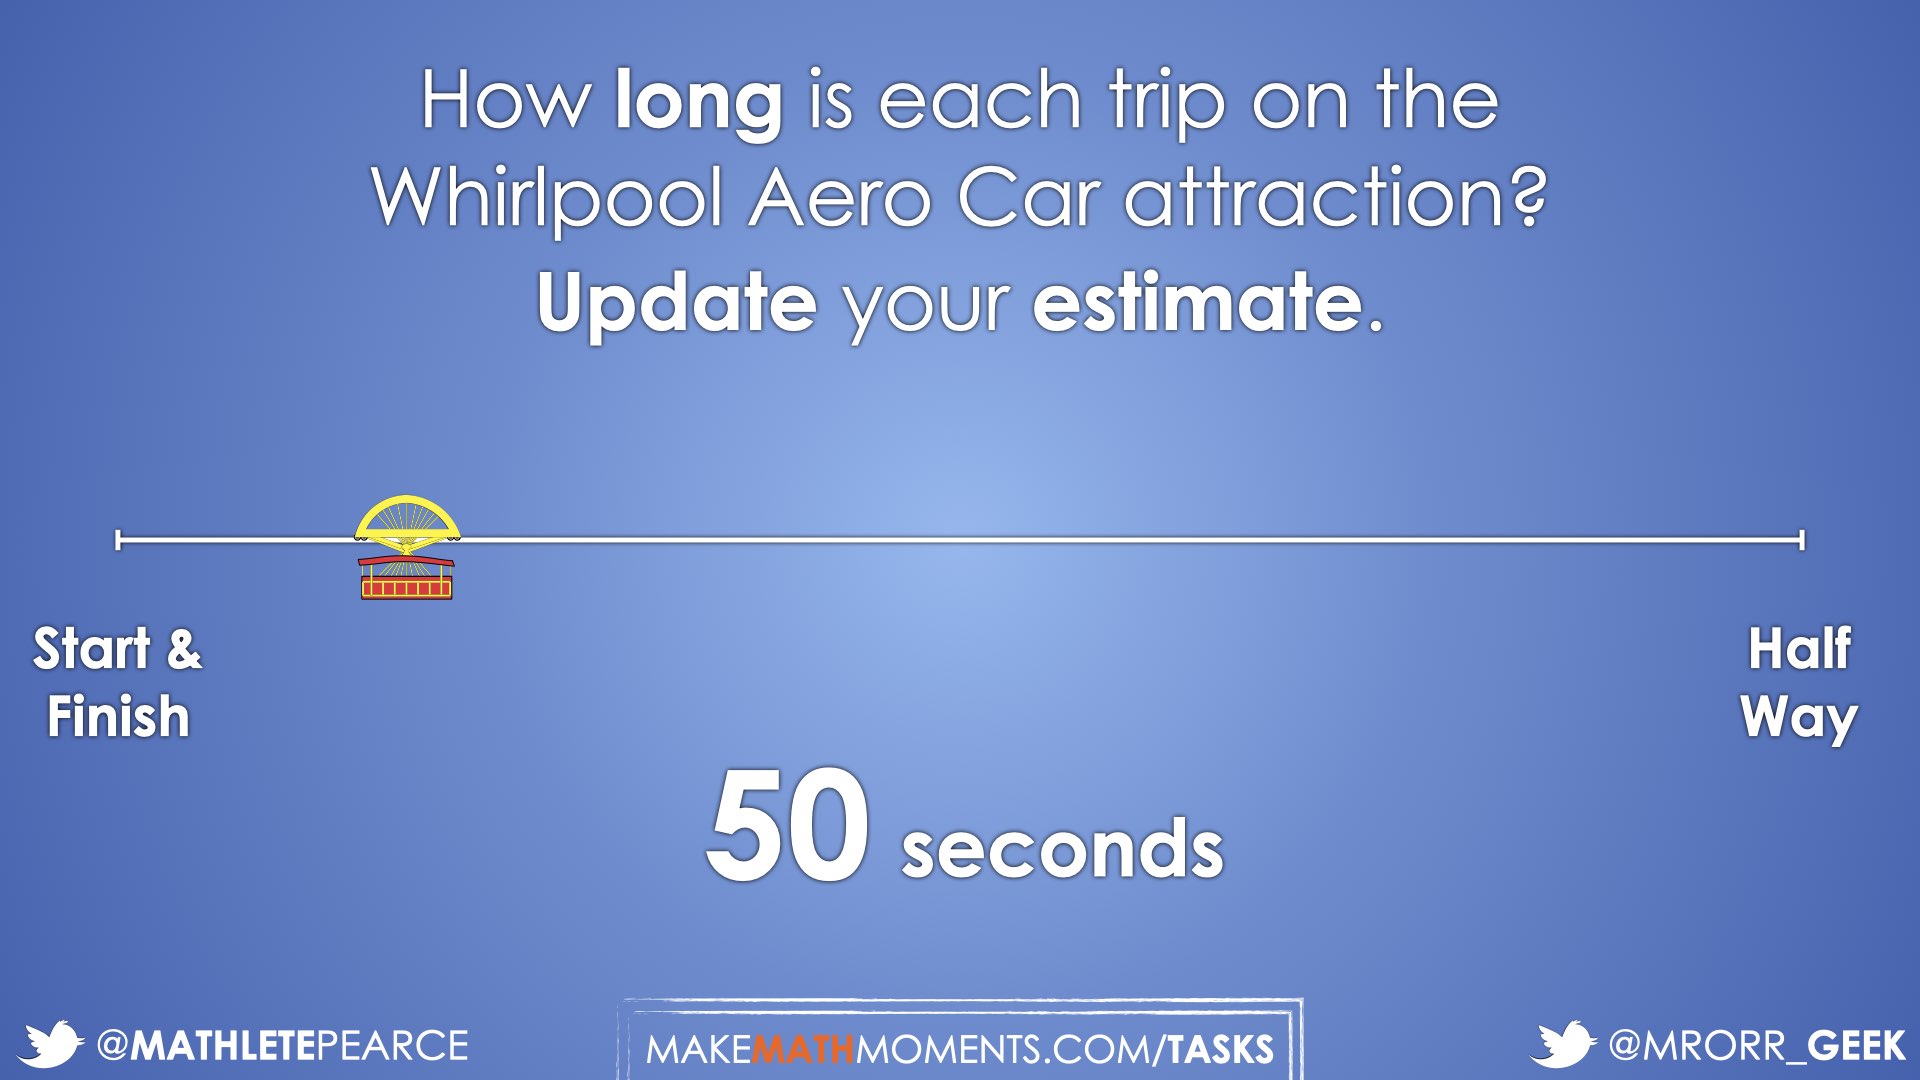 Whirlpool-Aero-Car-Day-1-06-Spark-Update-Estimate-Image.001.jpeg